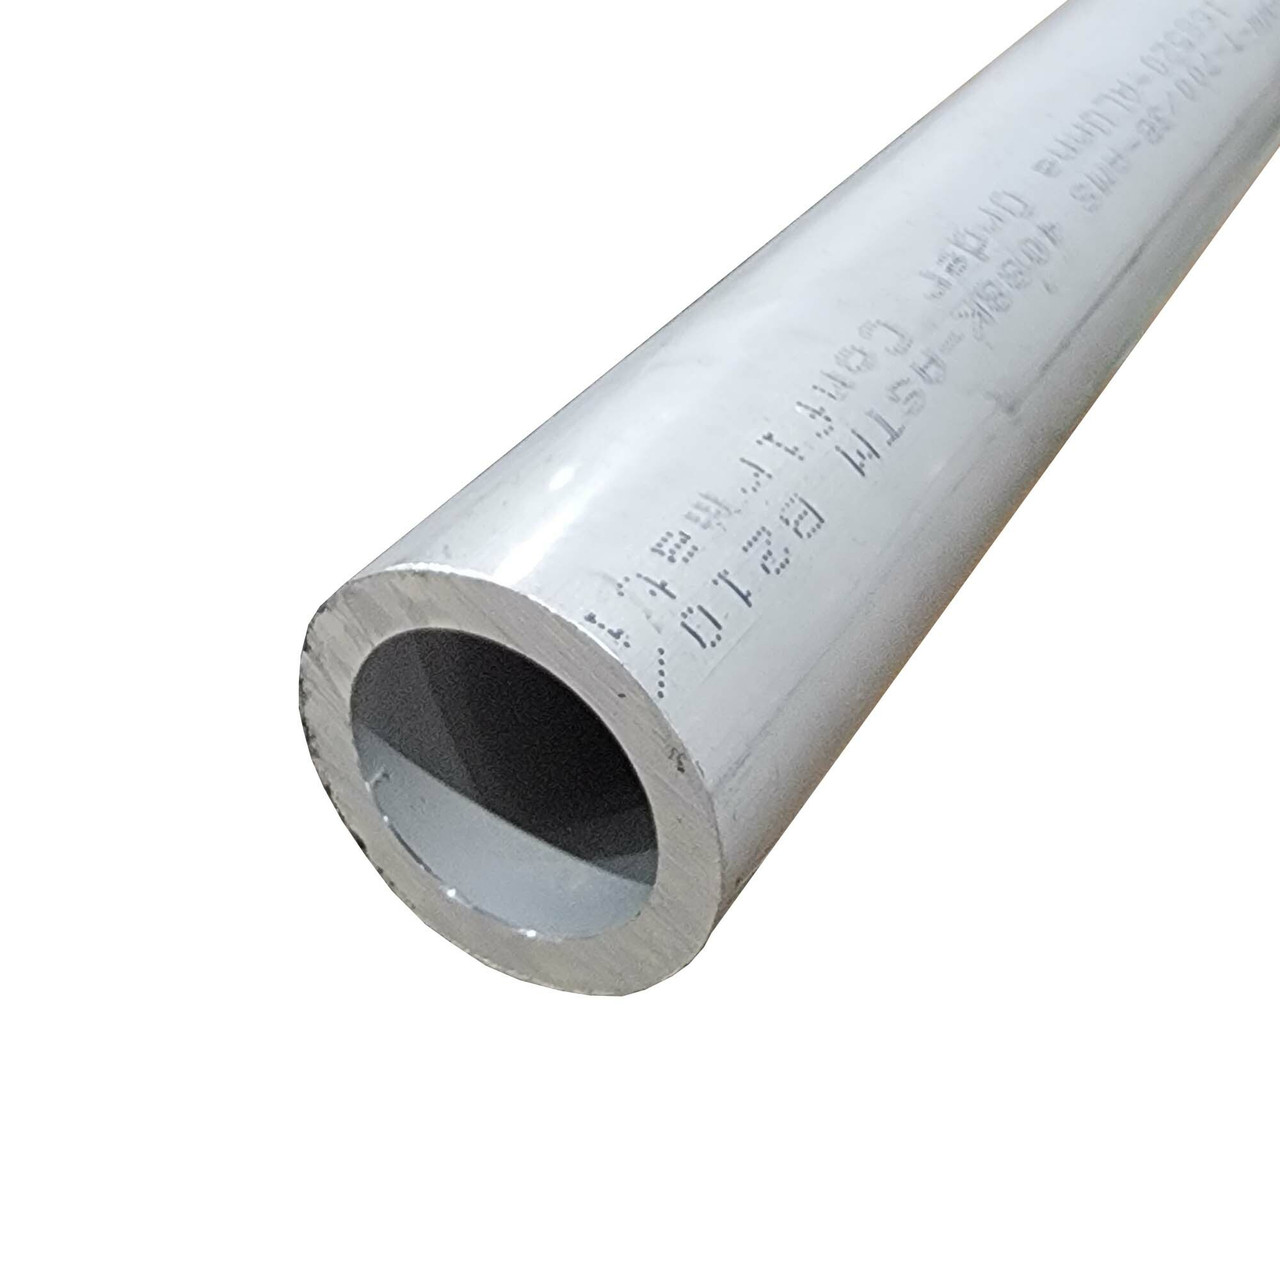 1.375" OD, 0.188" Wall, 48" long, 2024-T3 Aluminum Round Tube